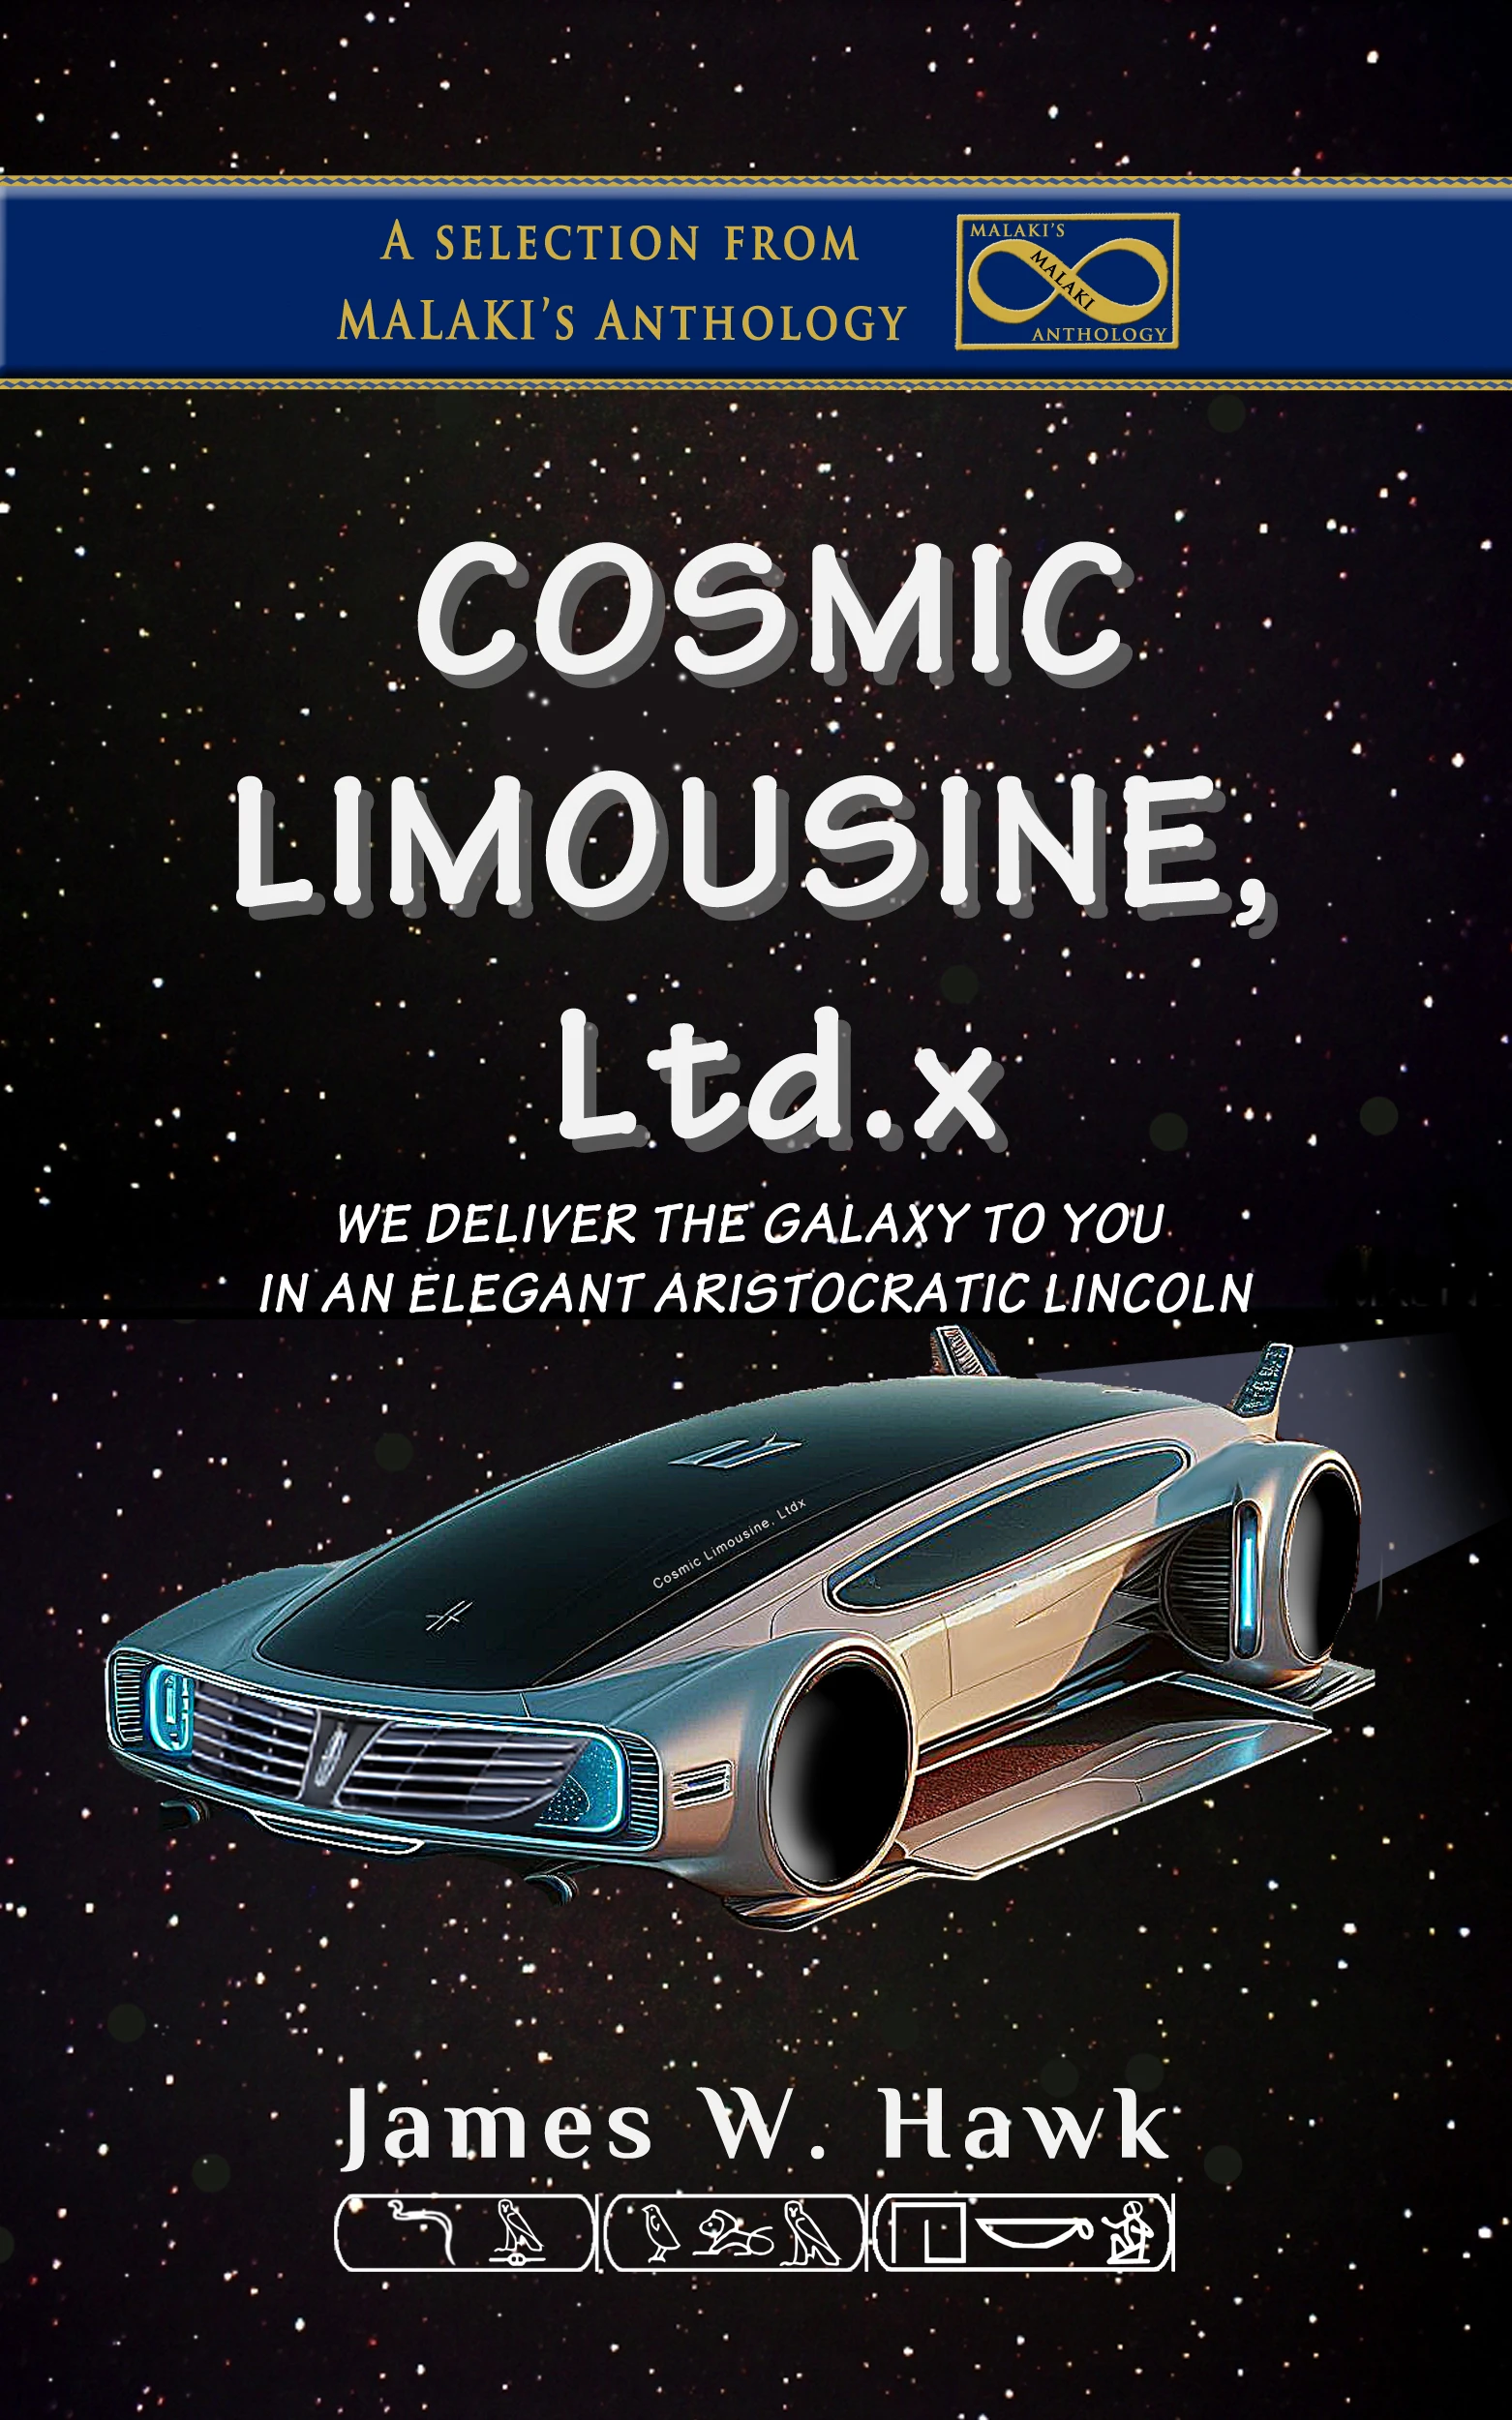 COSMIC LIMOUSINE, Ltd.x